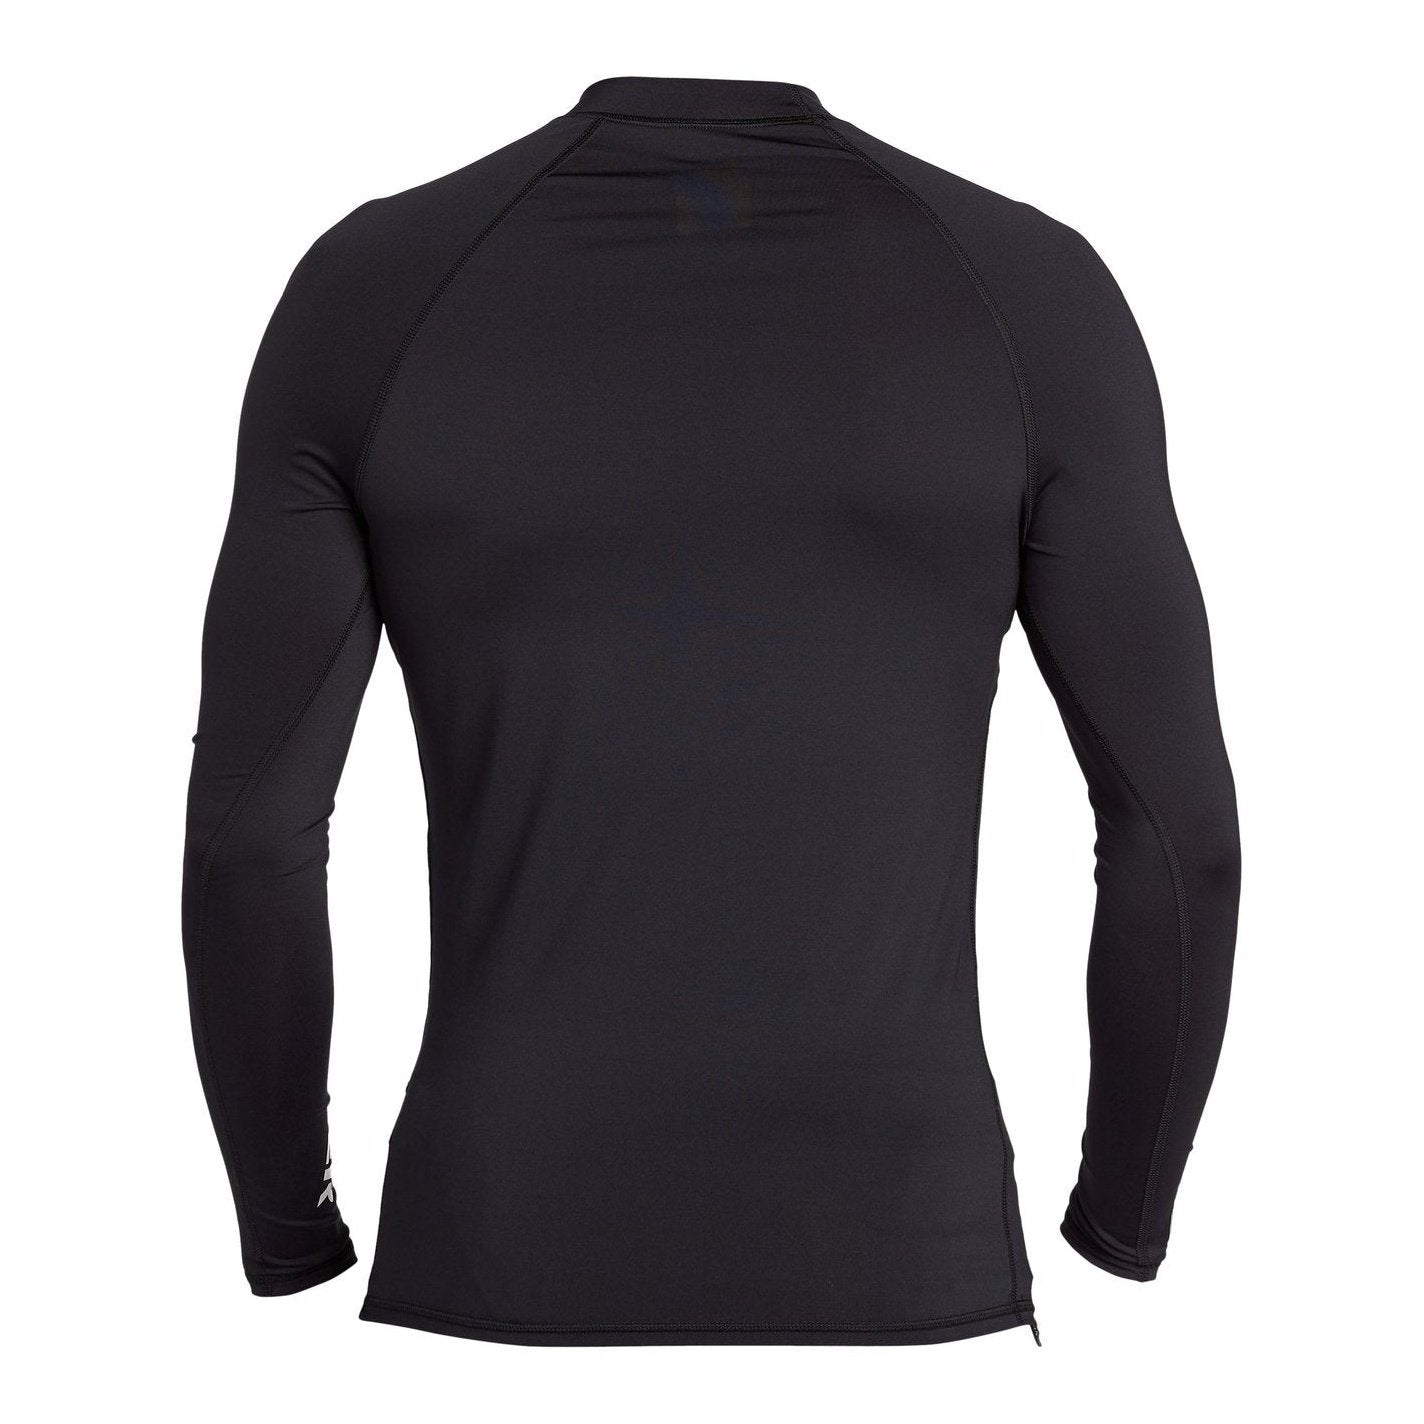 Quiksilver All Time - Long Sleeve UPF 50 Rash Vest for Men - Sporty Pro